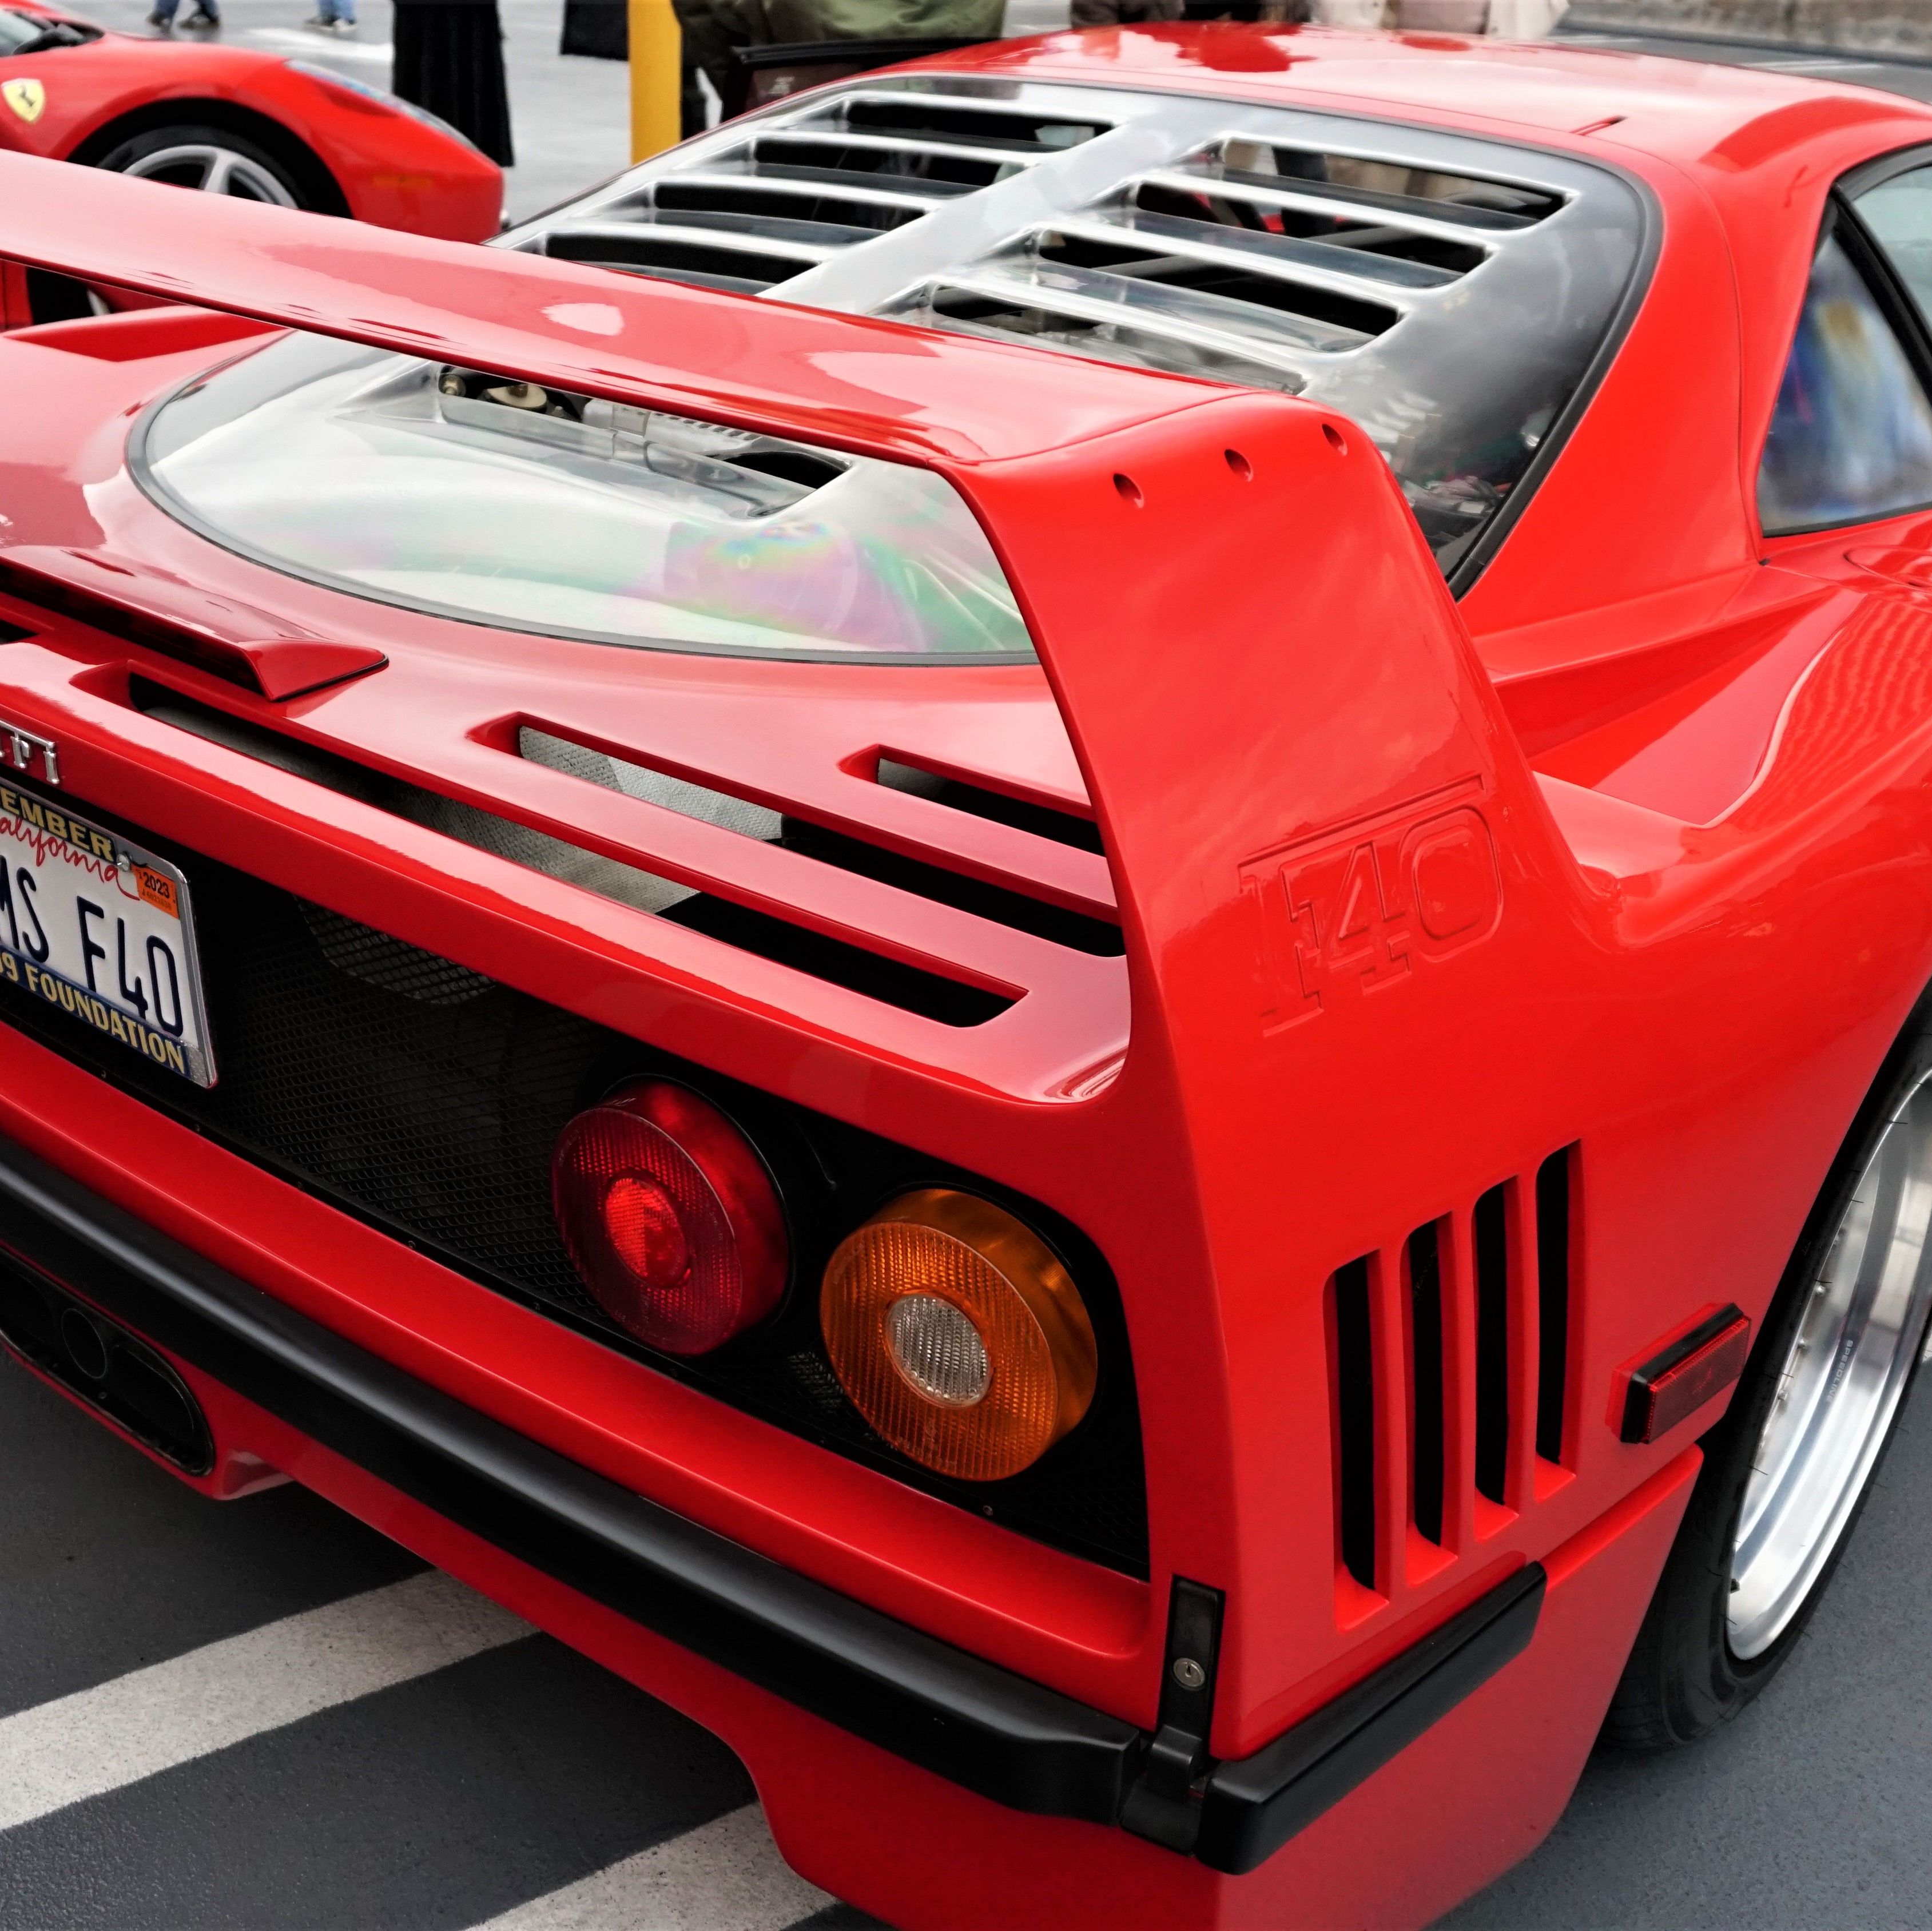 Cavallino Florida, Enzo Cruise-In California Celebrate Our Love of Ferraris